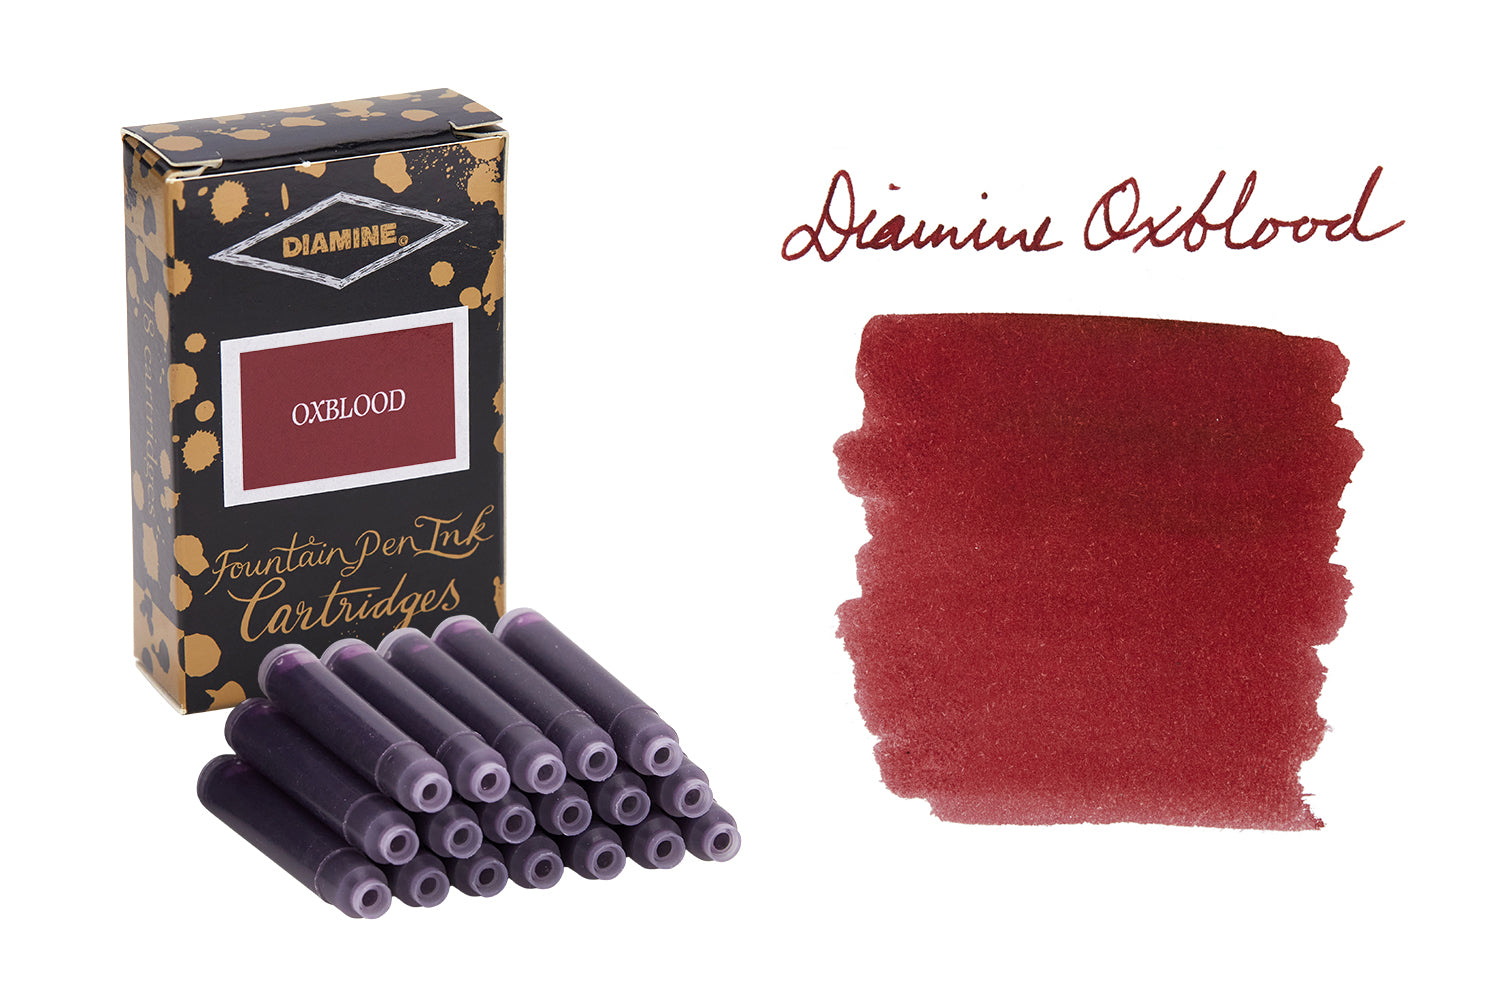 Diamine Oxblood - Fountain Pen Ink Cartridges - The Goulet Pen Company